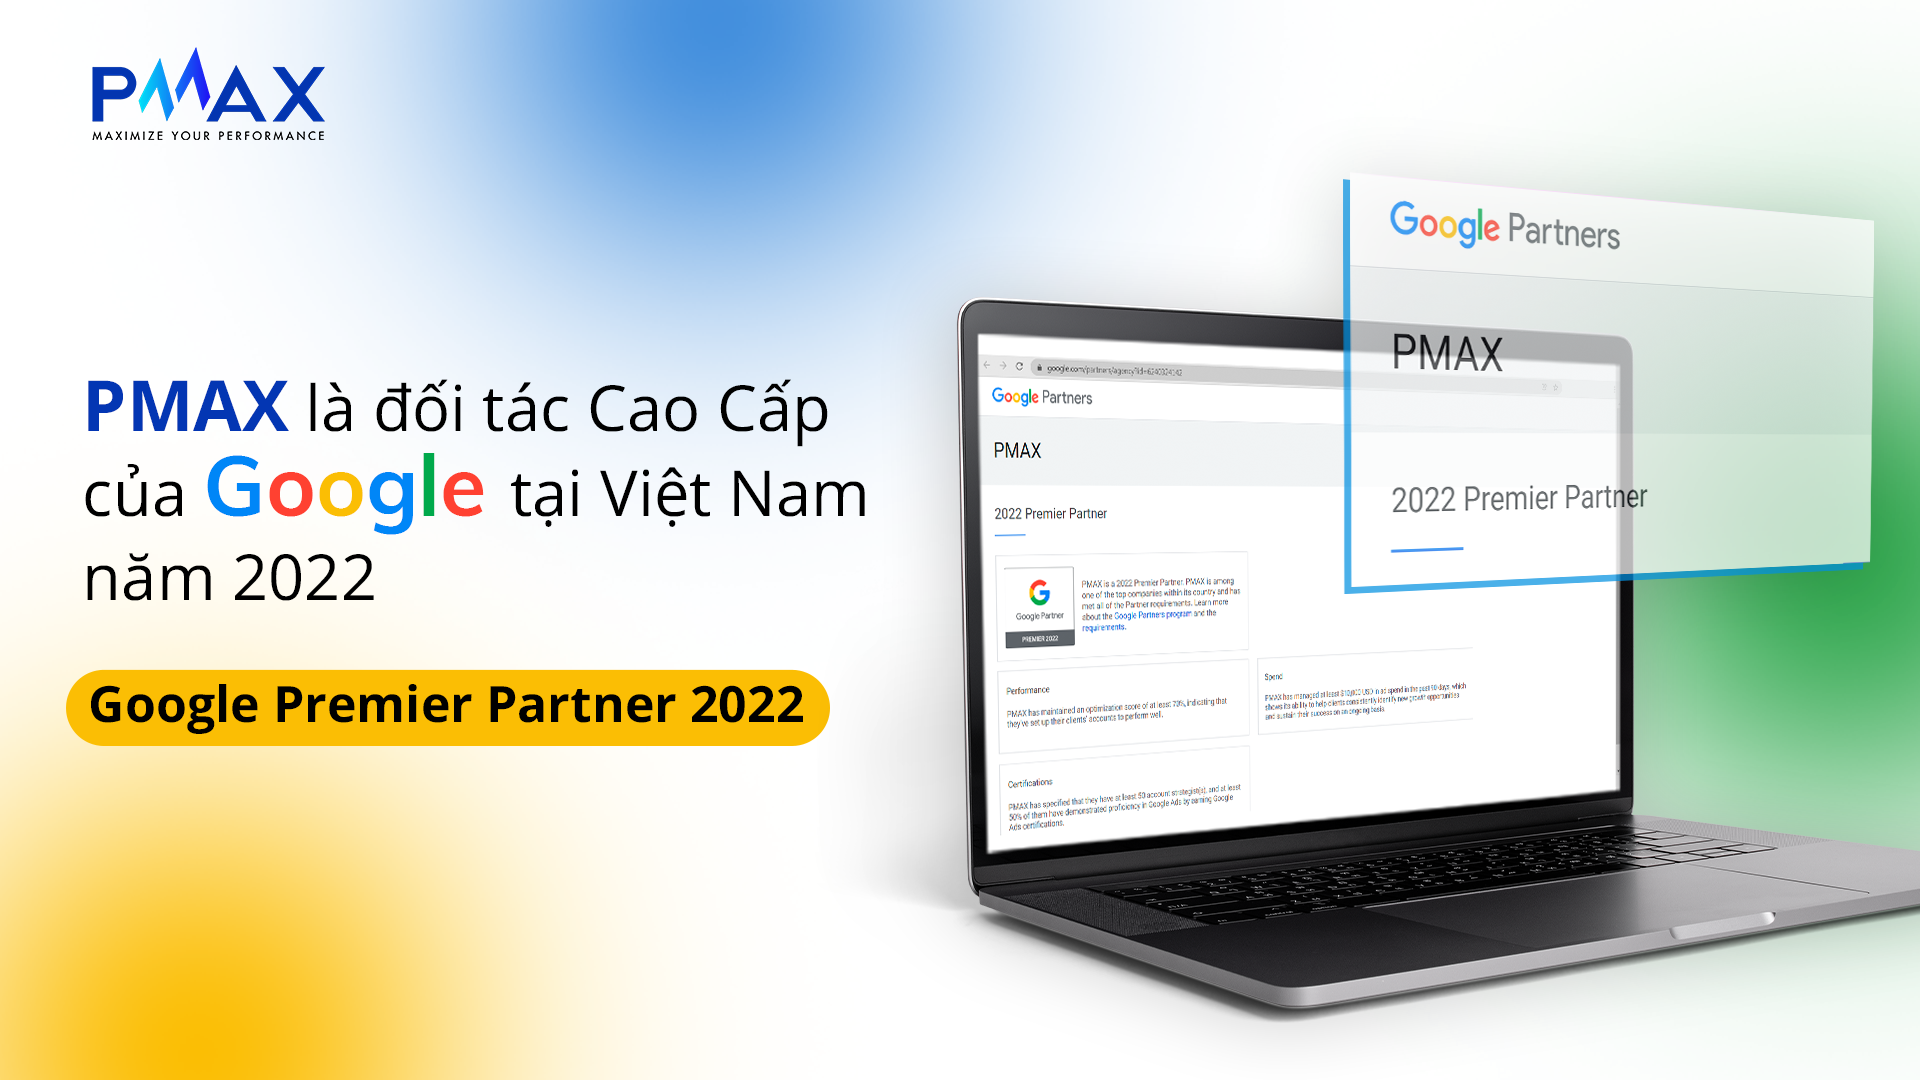 pmax-la-doi-tac-cao-cap-cua-google-tai-viet-nam-google-premier-partner-2022